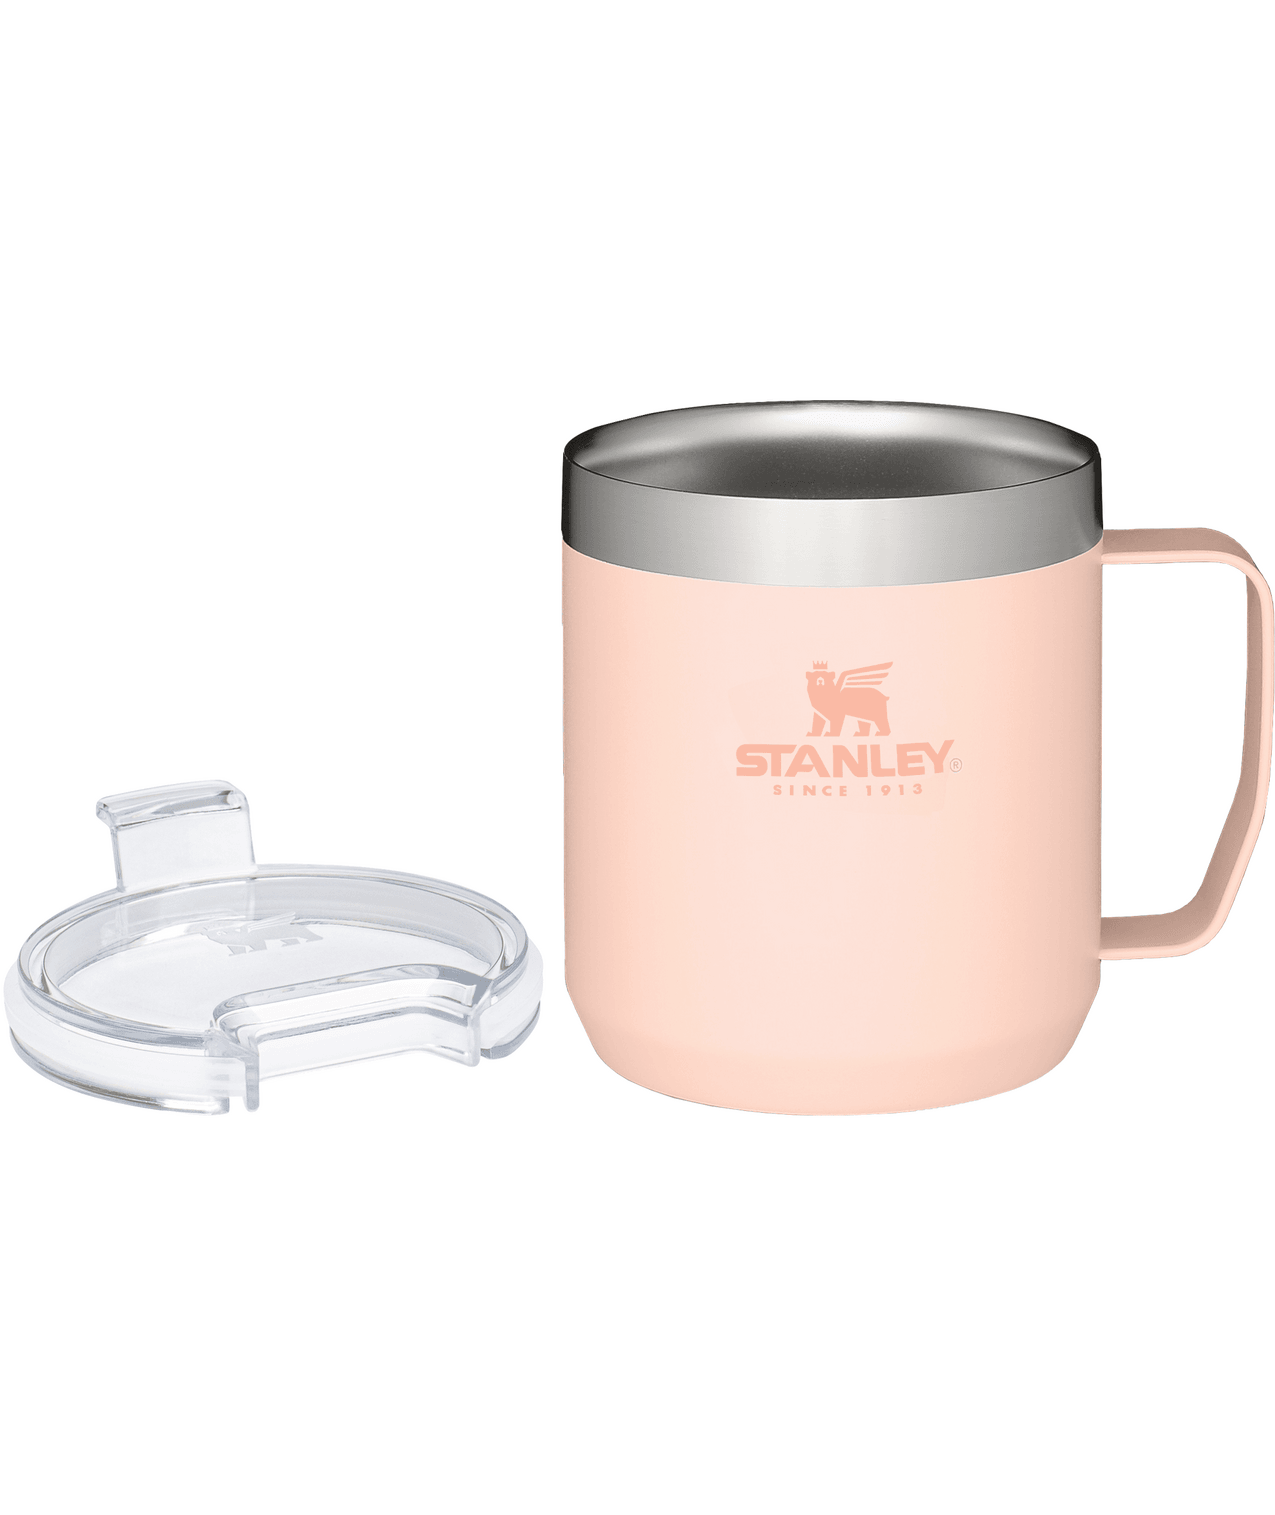 Stanley Legendary Camp Mug, 12oz, Stainless Steel  